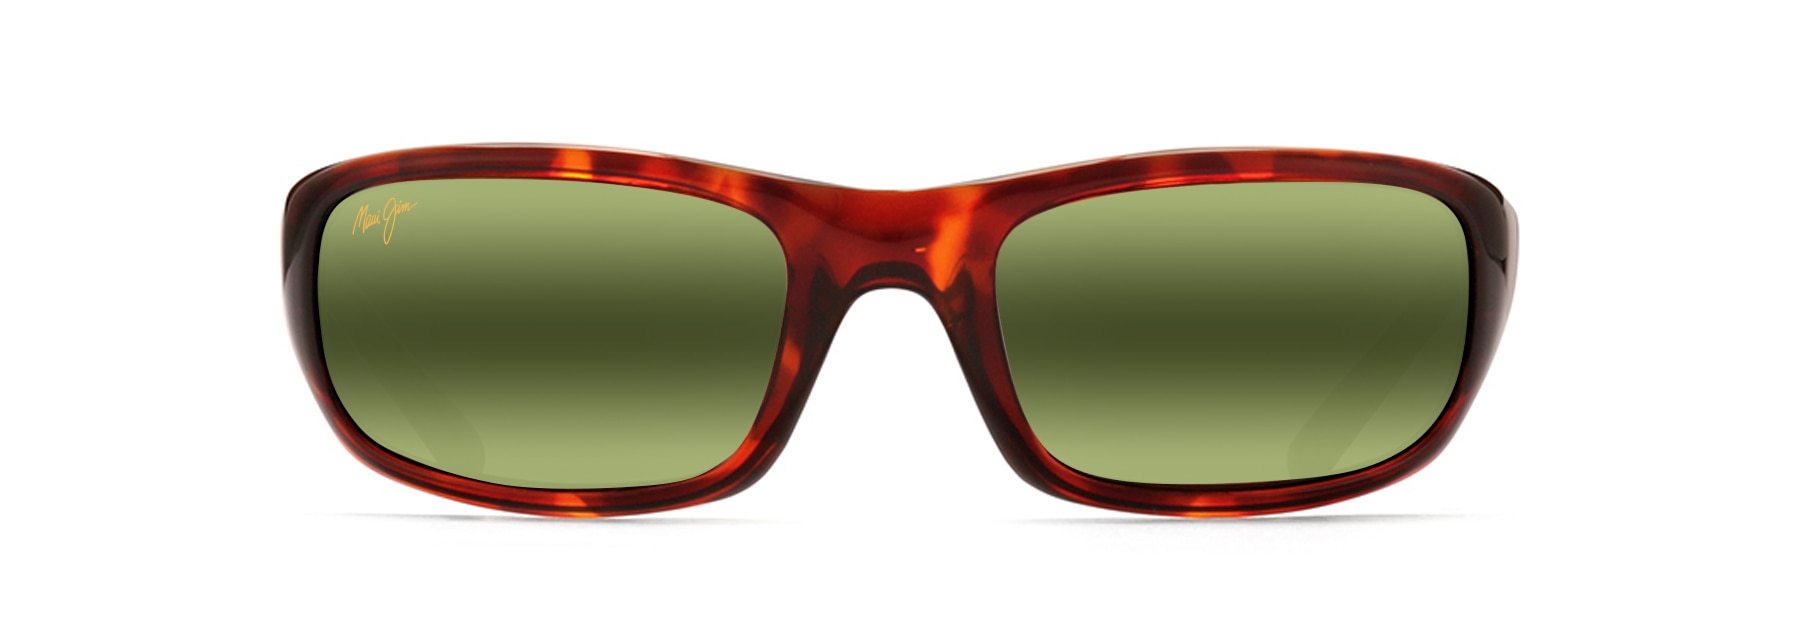 MyMaui Stingray MM103-007 Sunglasses